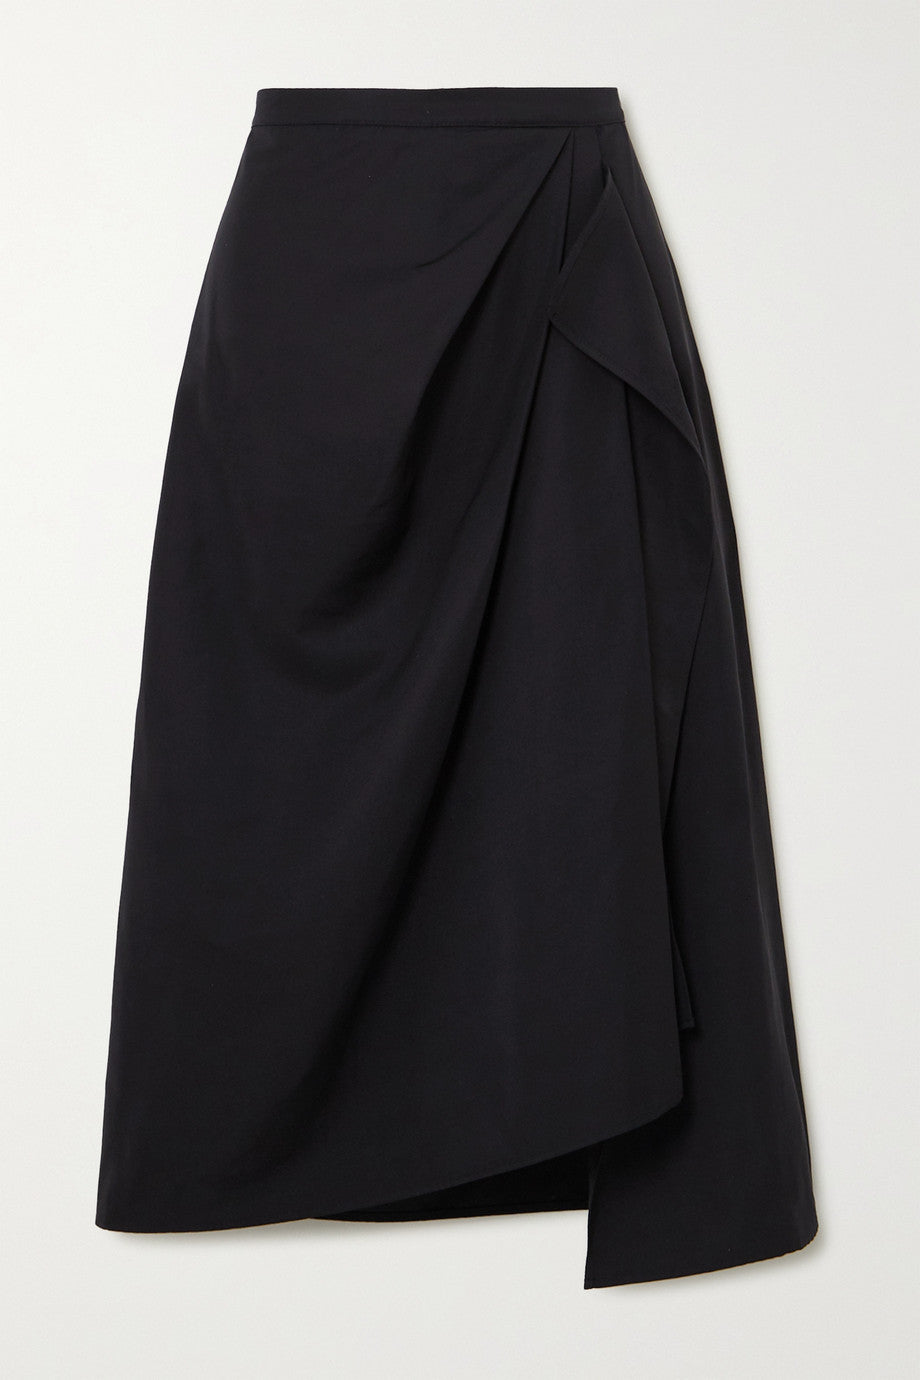 The R Collective + Net Sustain Welland Asymmetric Draped Taffeta Black Midi Skirt